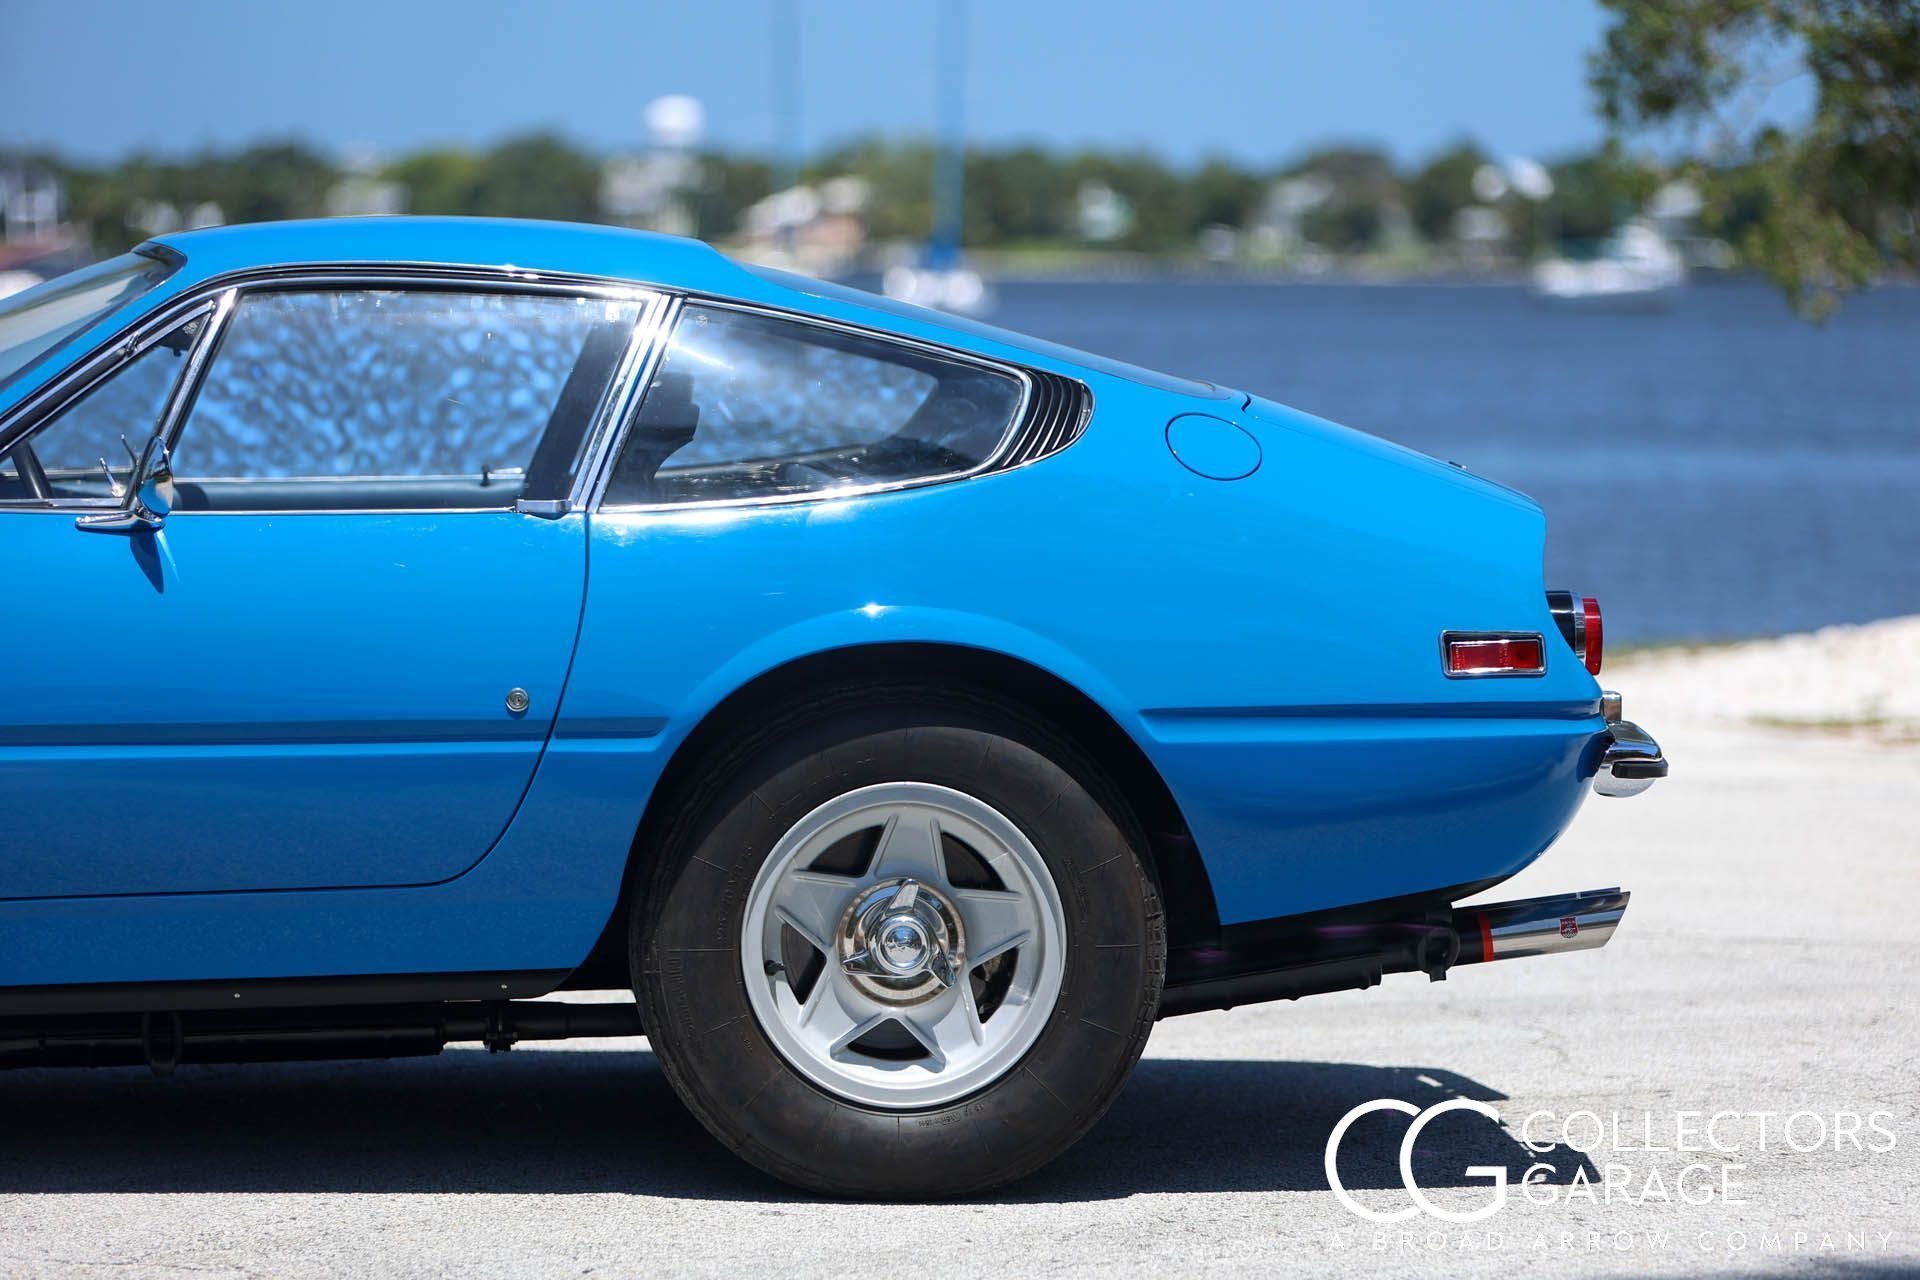 For Sale 1973 Ferrari 365 GTB/4 'Daytona'